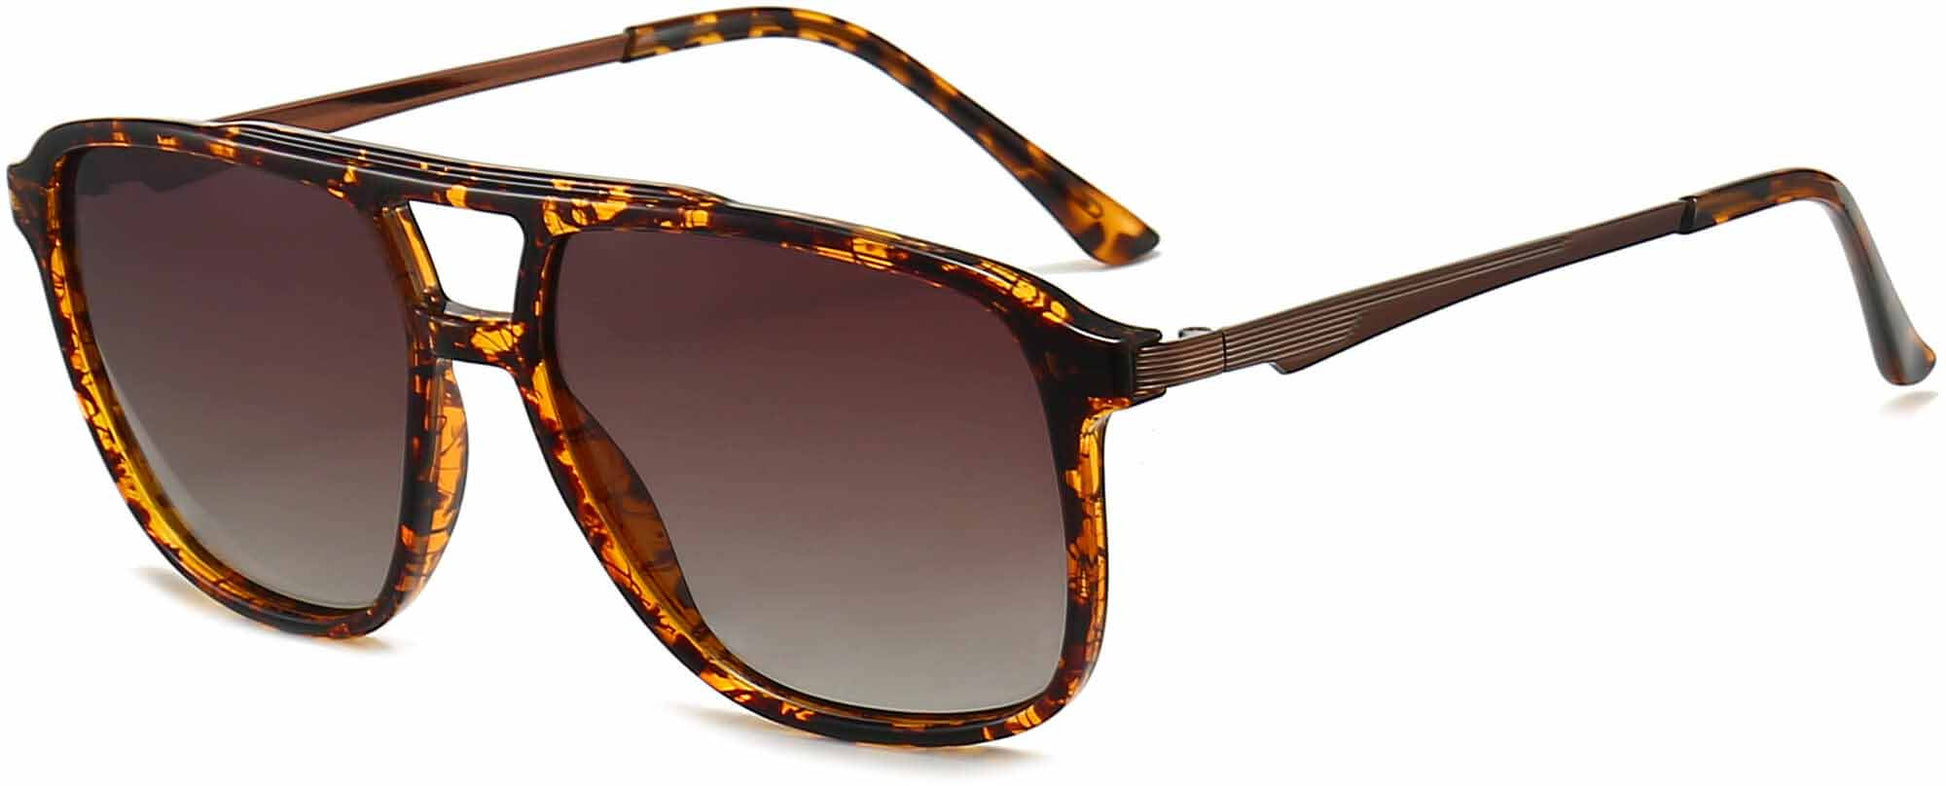 Emerson Tortoise Plastic Sunglasses from ANRRI, angle view